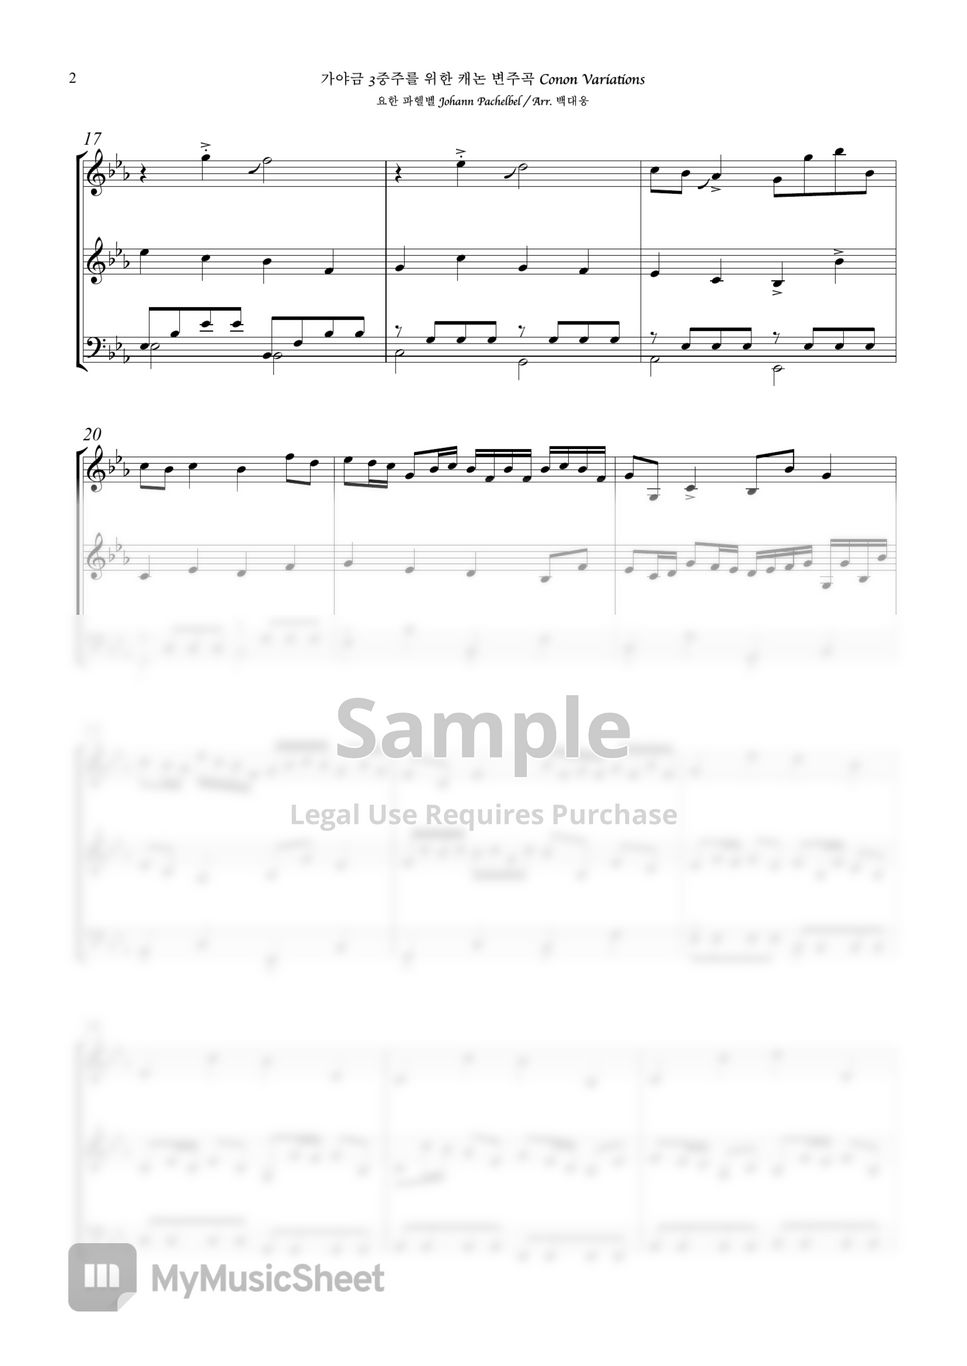 Johann Pachlbel - Canon Variations for Gayageum Trio 가야금 3중주를 위한 캐논 변주곡 (Part 0) by GATAEUN